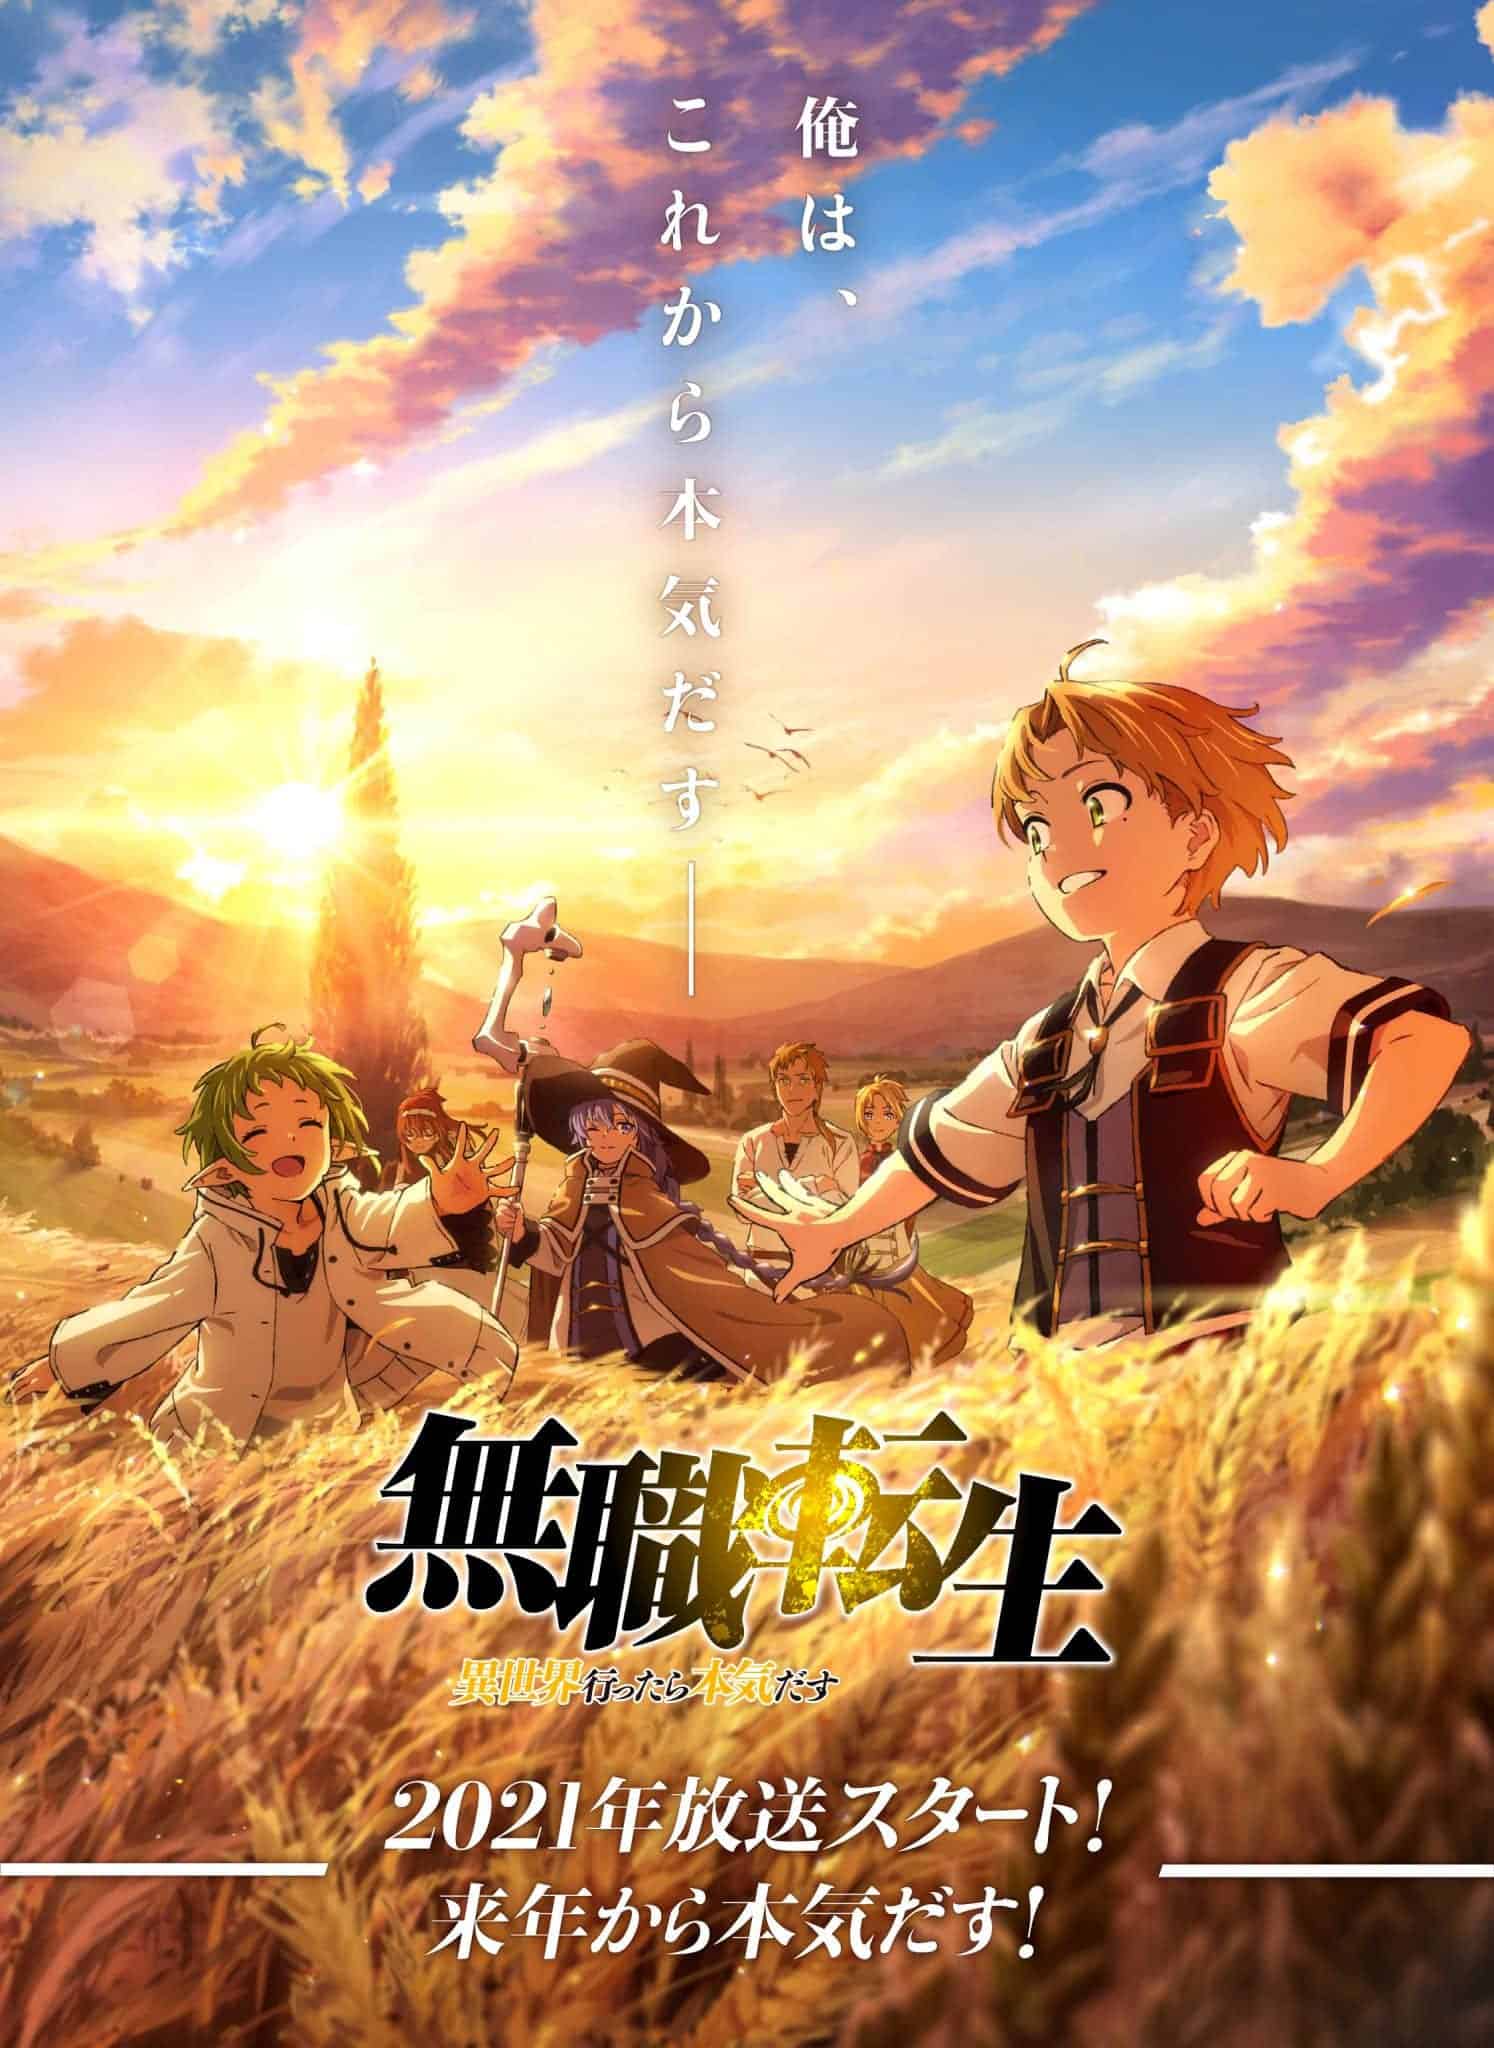 Annonce de anime Mushoku Tensei en date de sortie